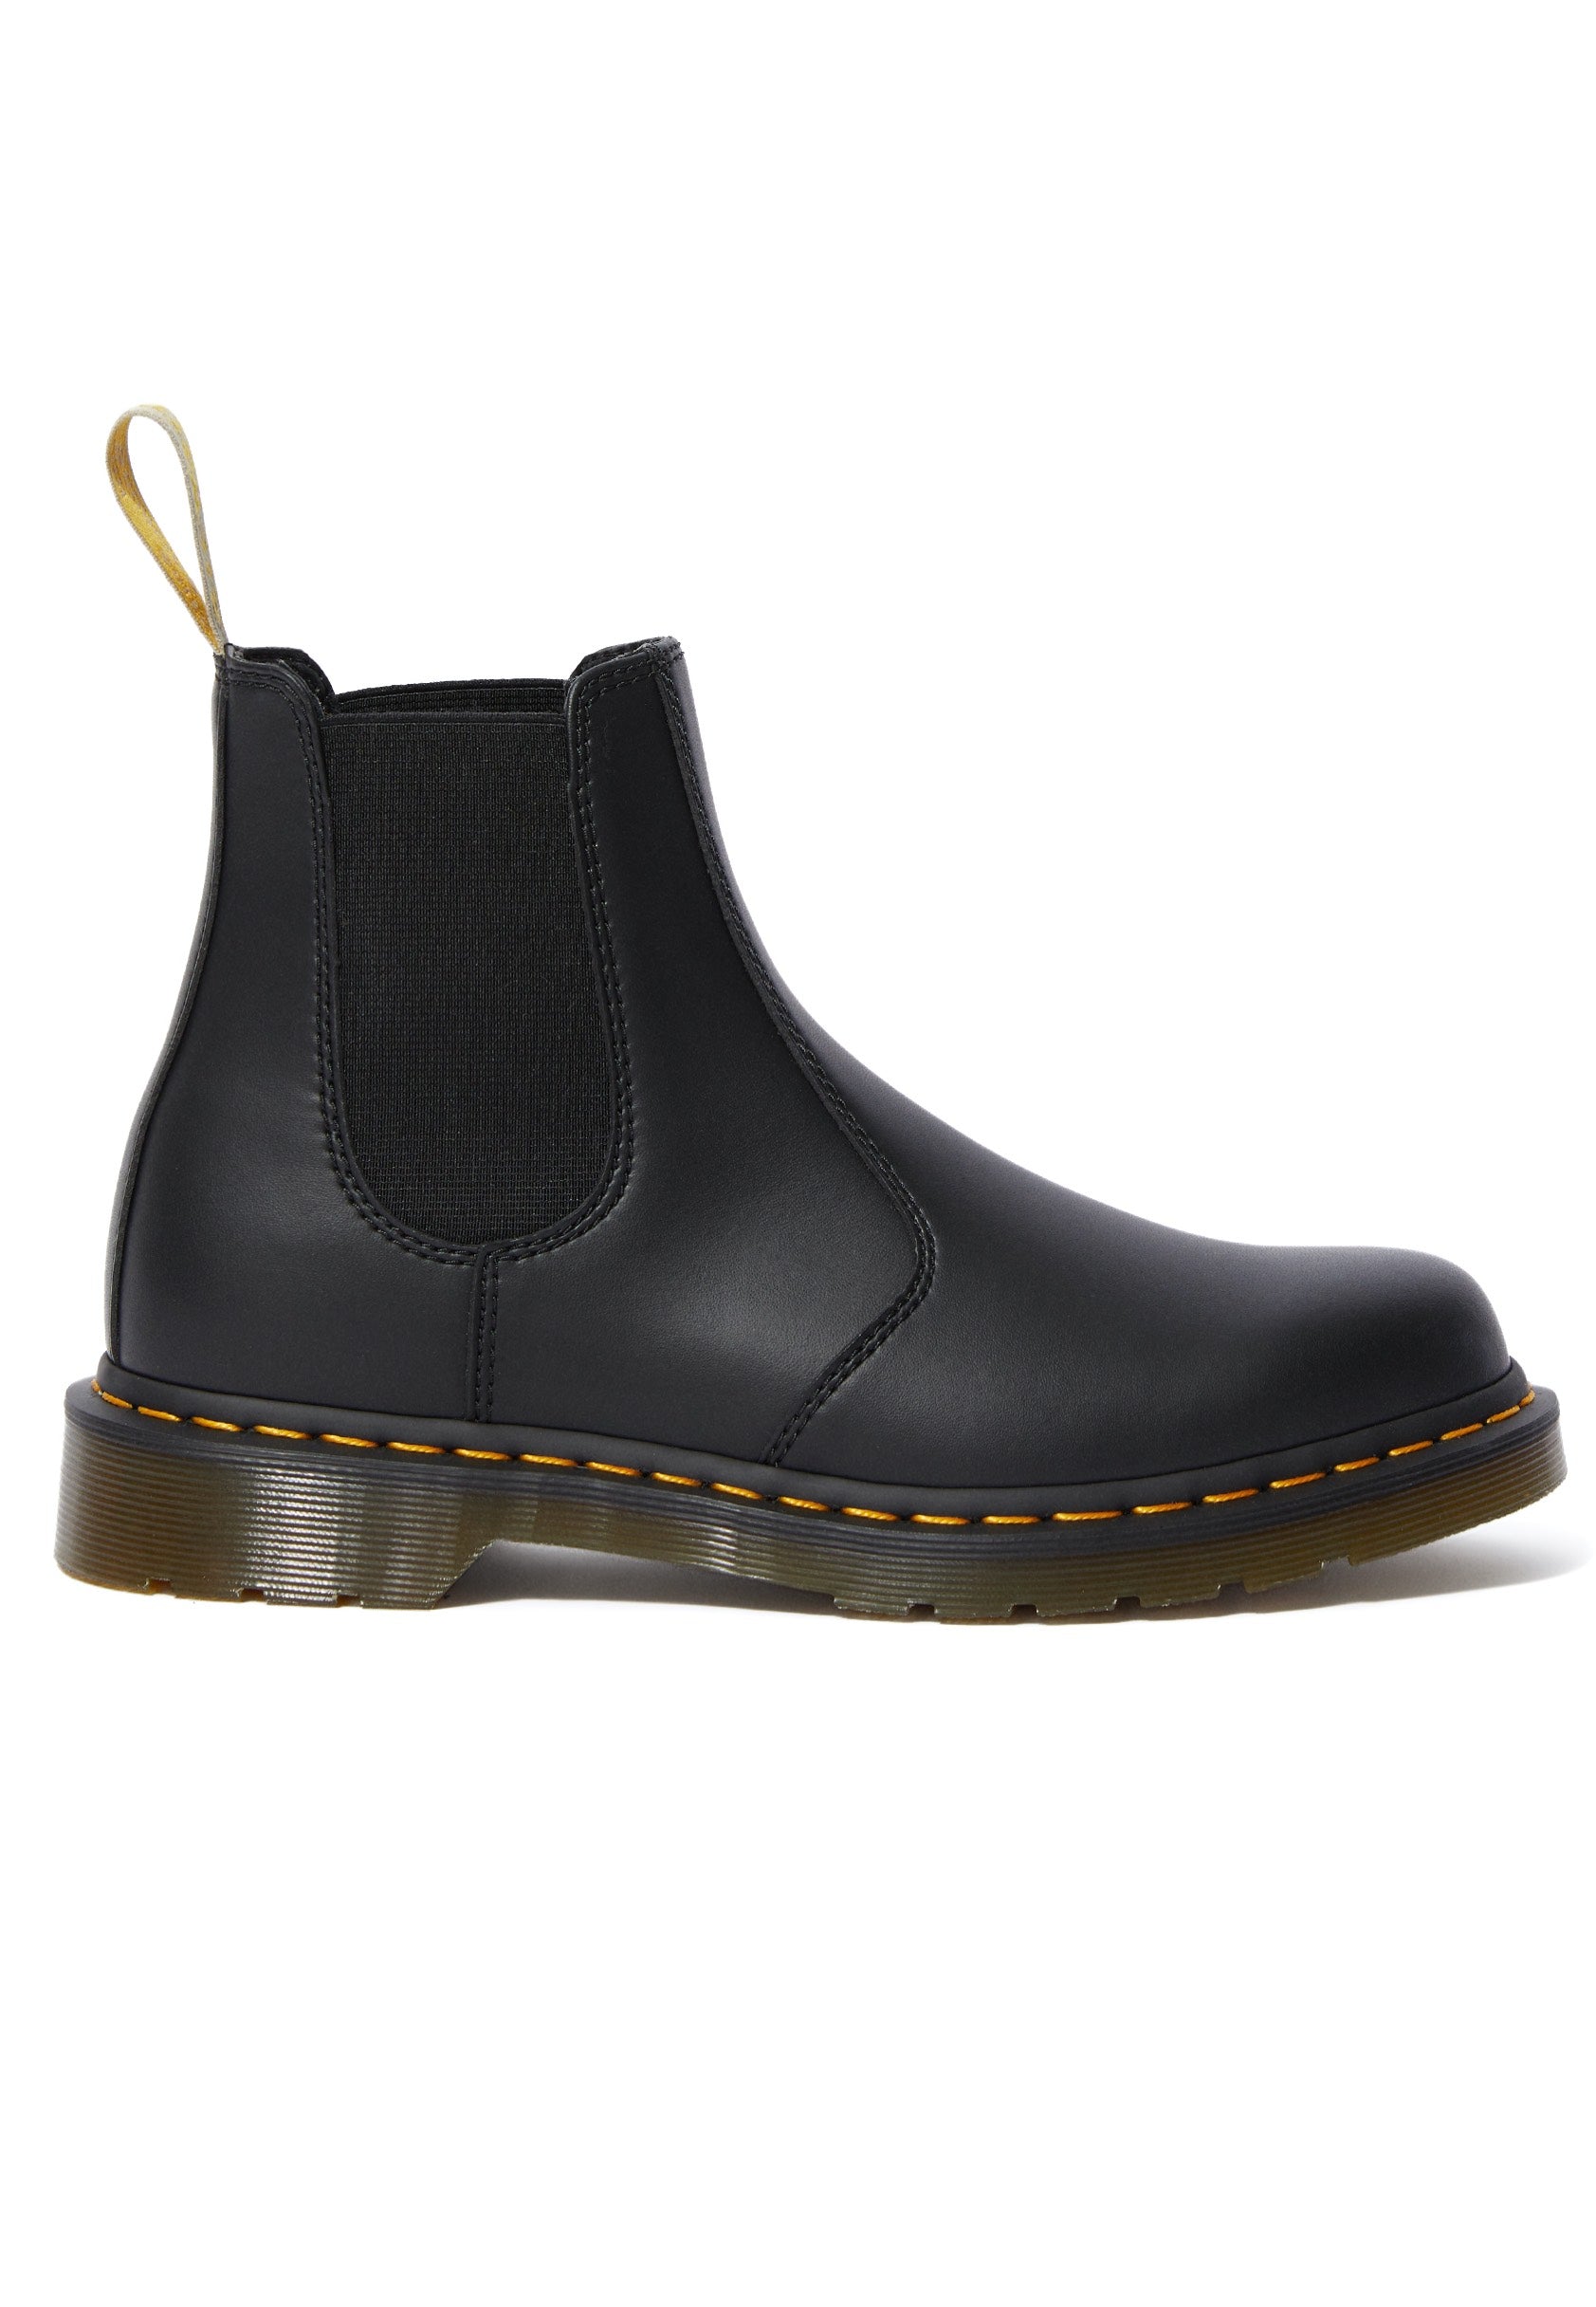 Dr. Martens - Vegan 2976 Chelsea Boots Black Felix Rub Off - Girl Shoes